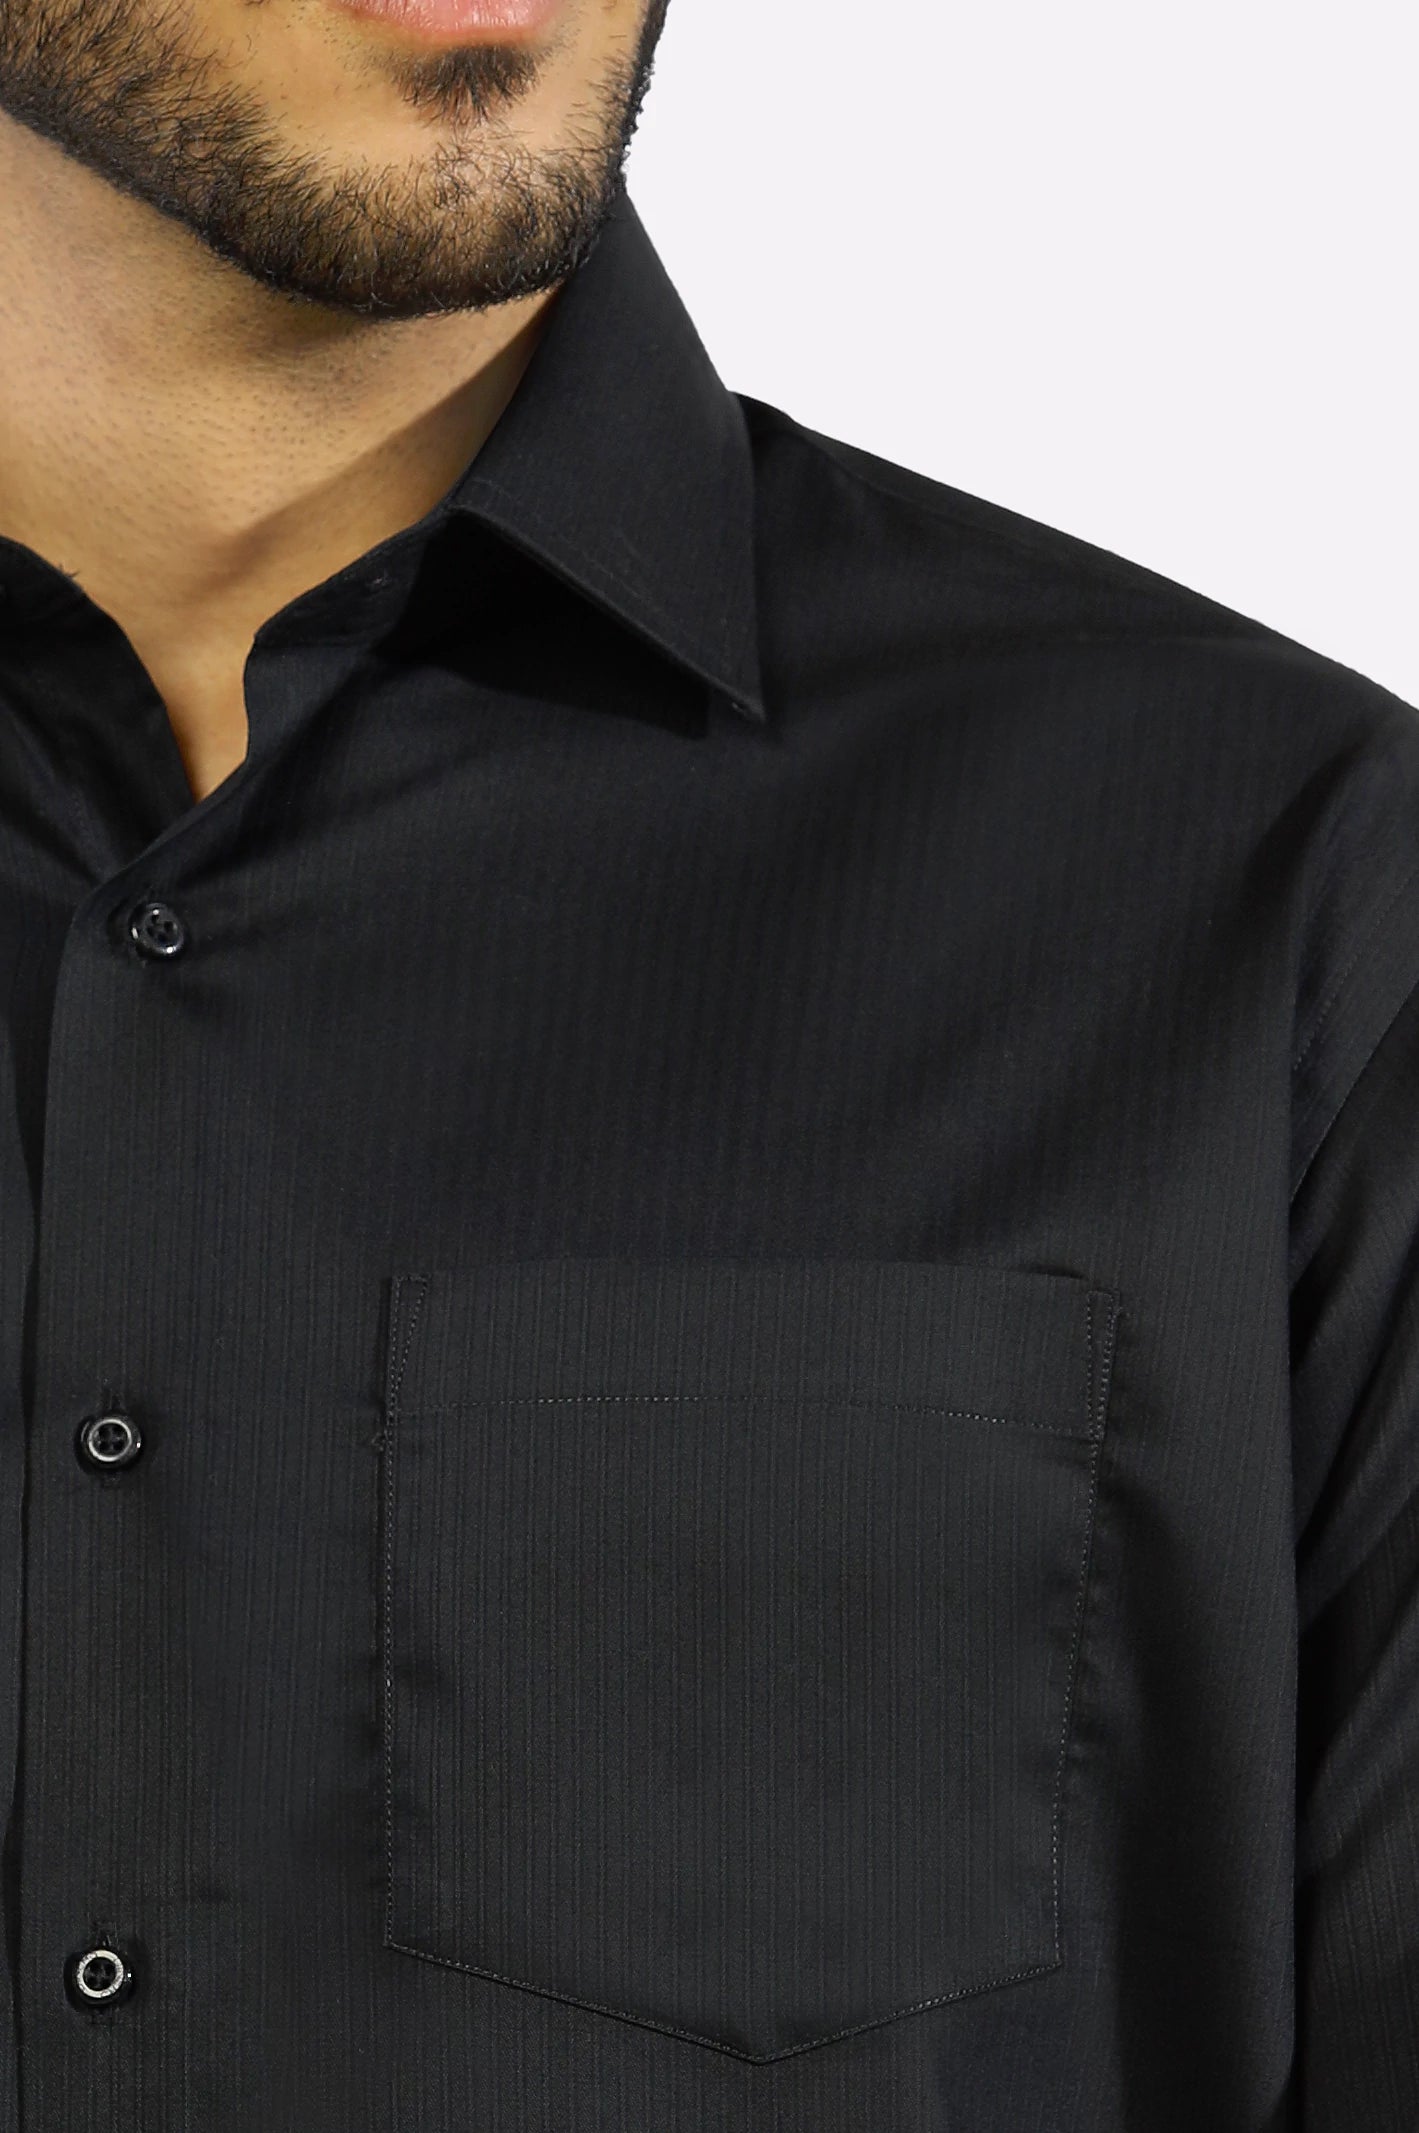 Black Textured Stripe Formal Shirt